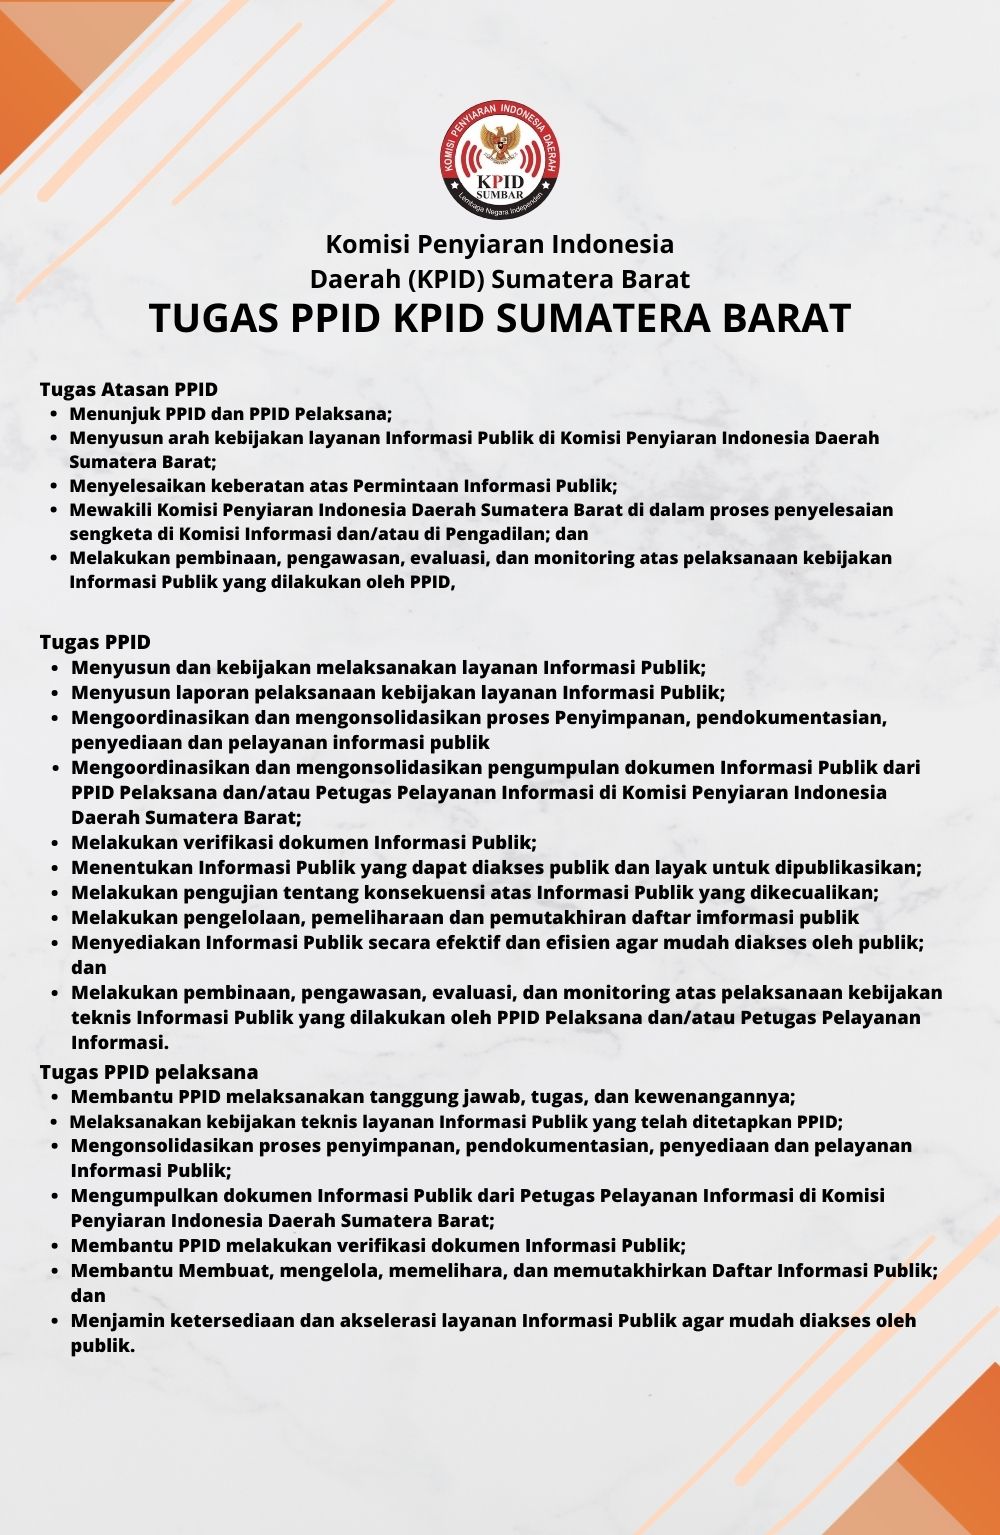 Tugas PPID KPI Daerah Sumatera Barat